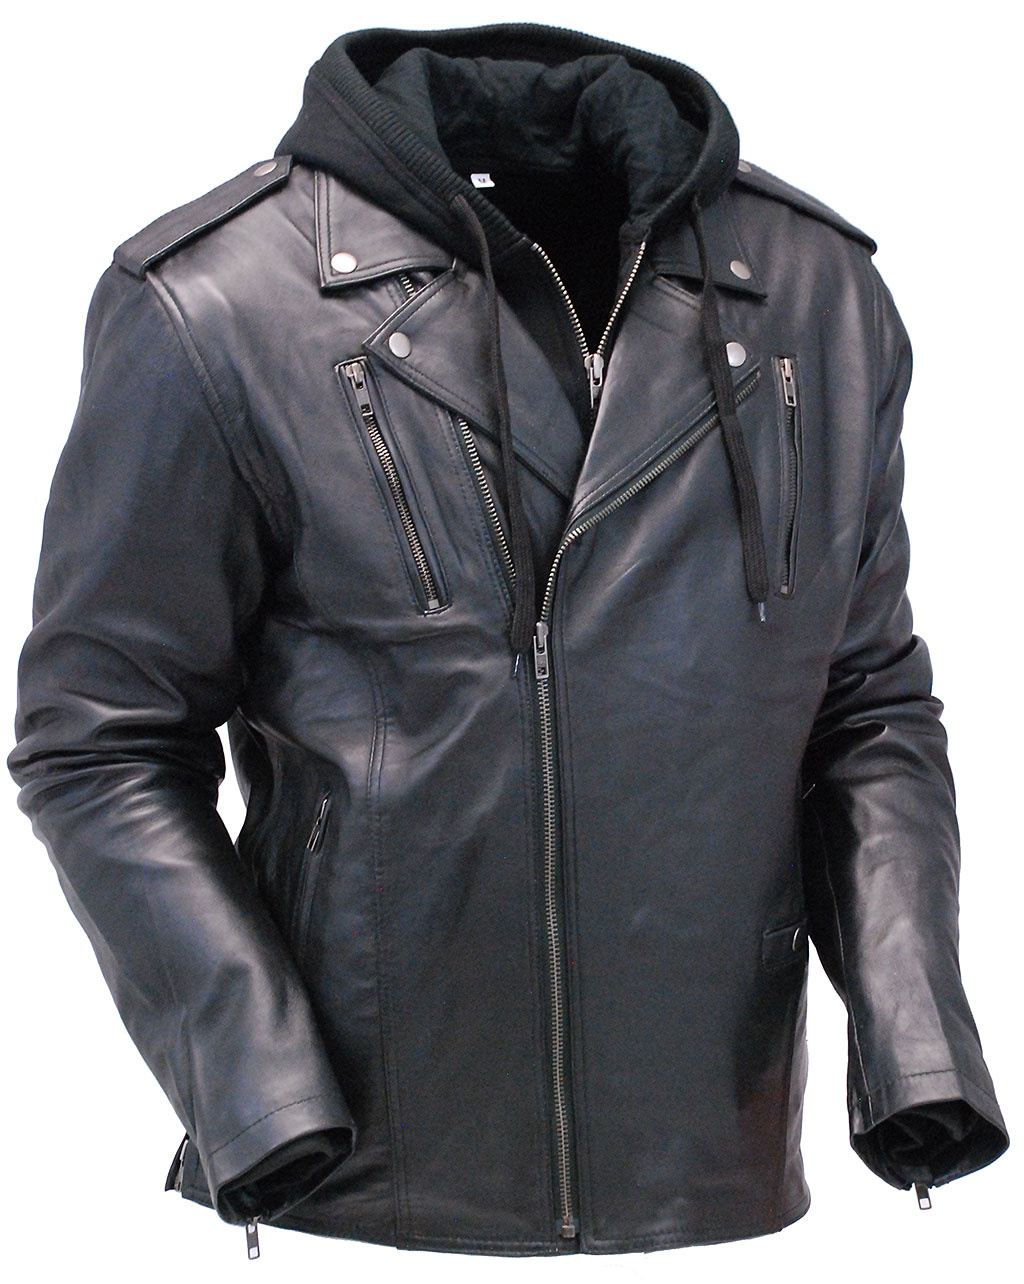 Men's Soft Black Leather Motorcycle Jacket w/Hoodie #M6925VHGK - Jamin ...